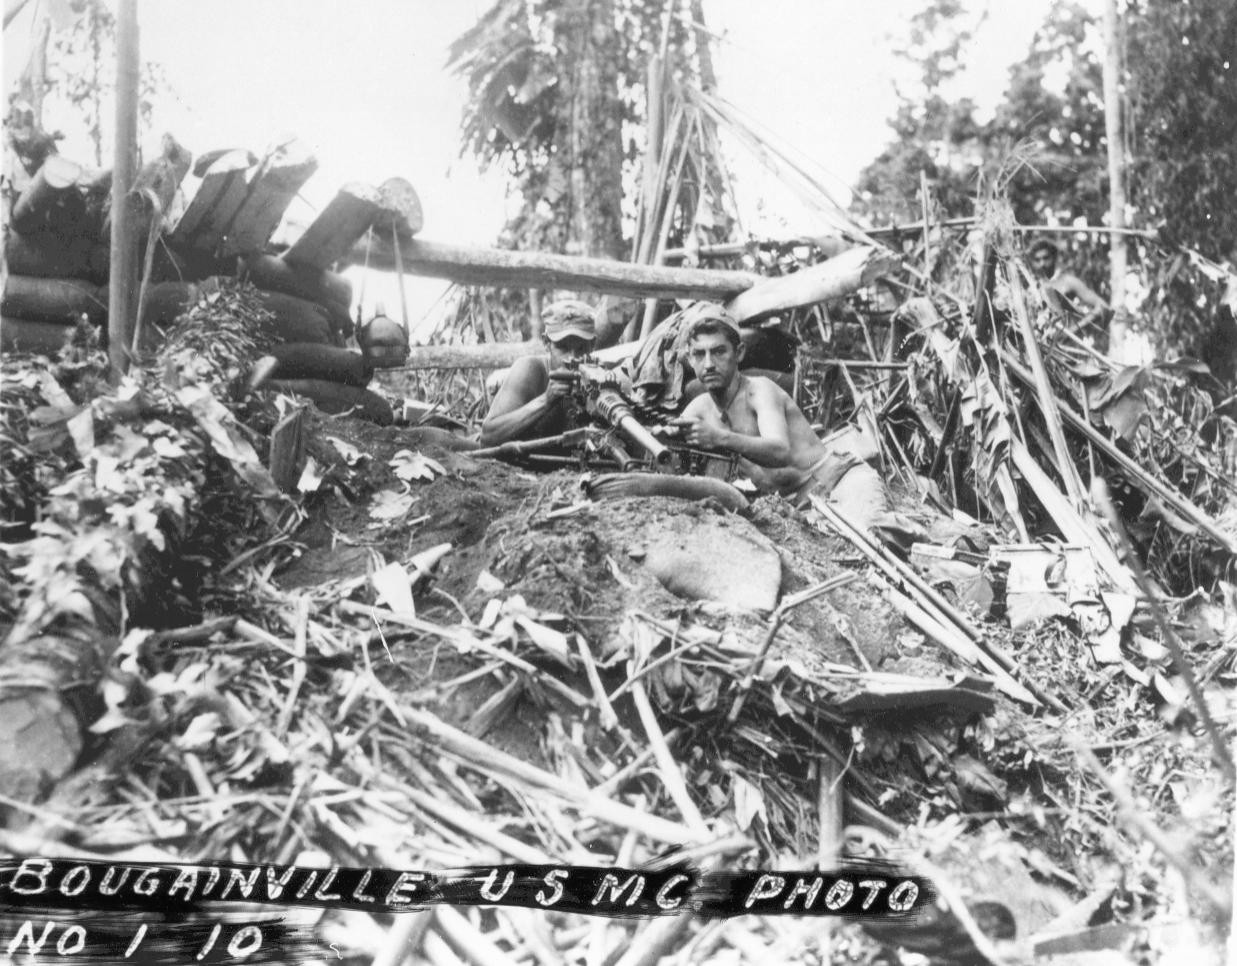 US Marine M2 Browning machine gun crew, Bougainville, Solomon Islands, 1943-1944